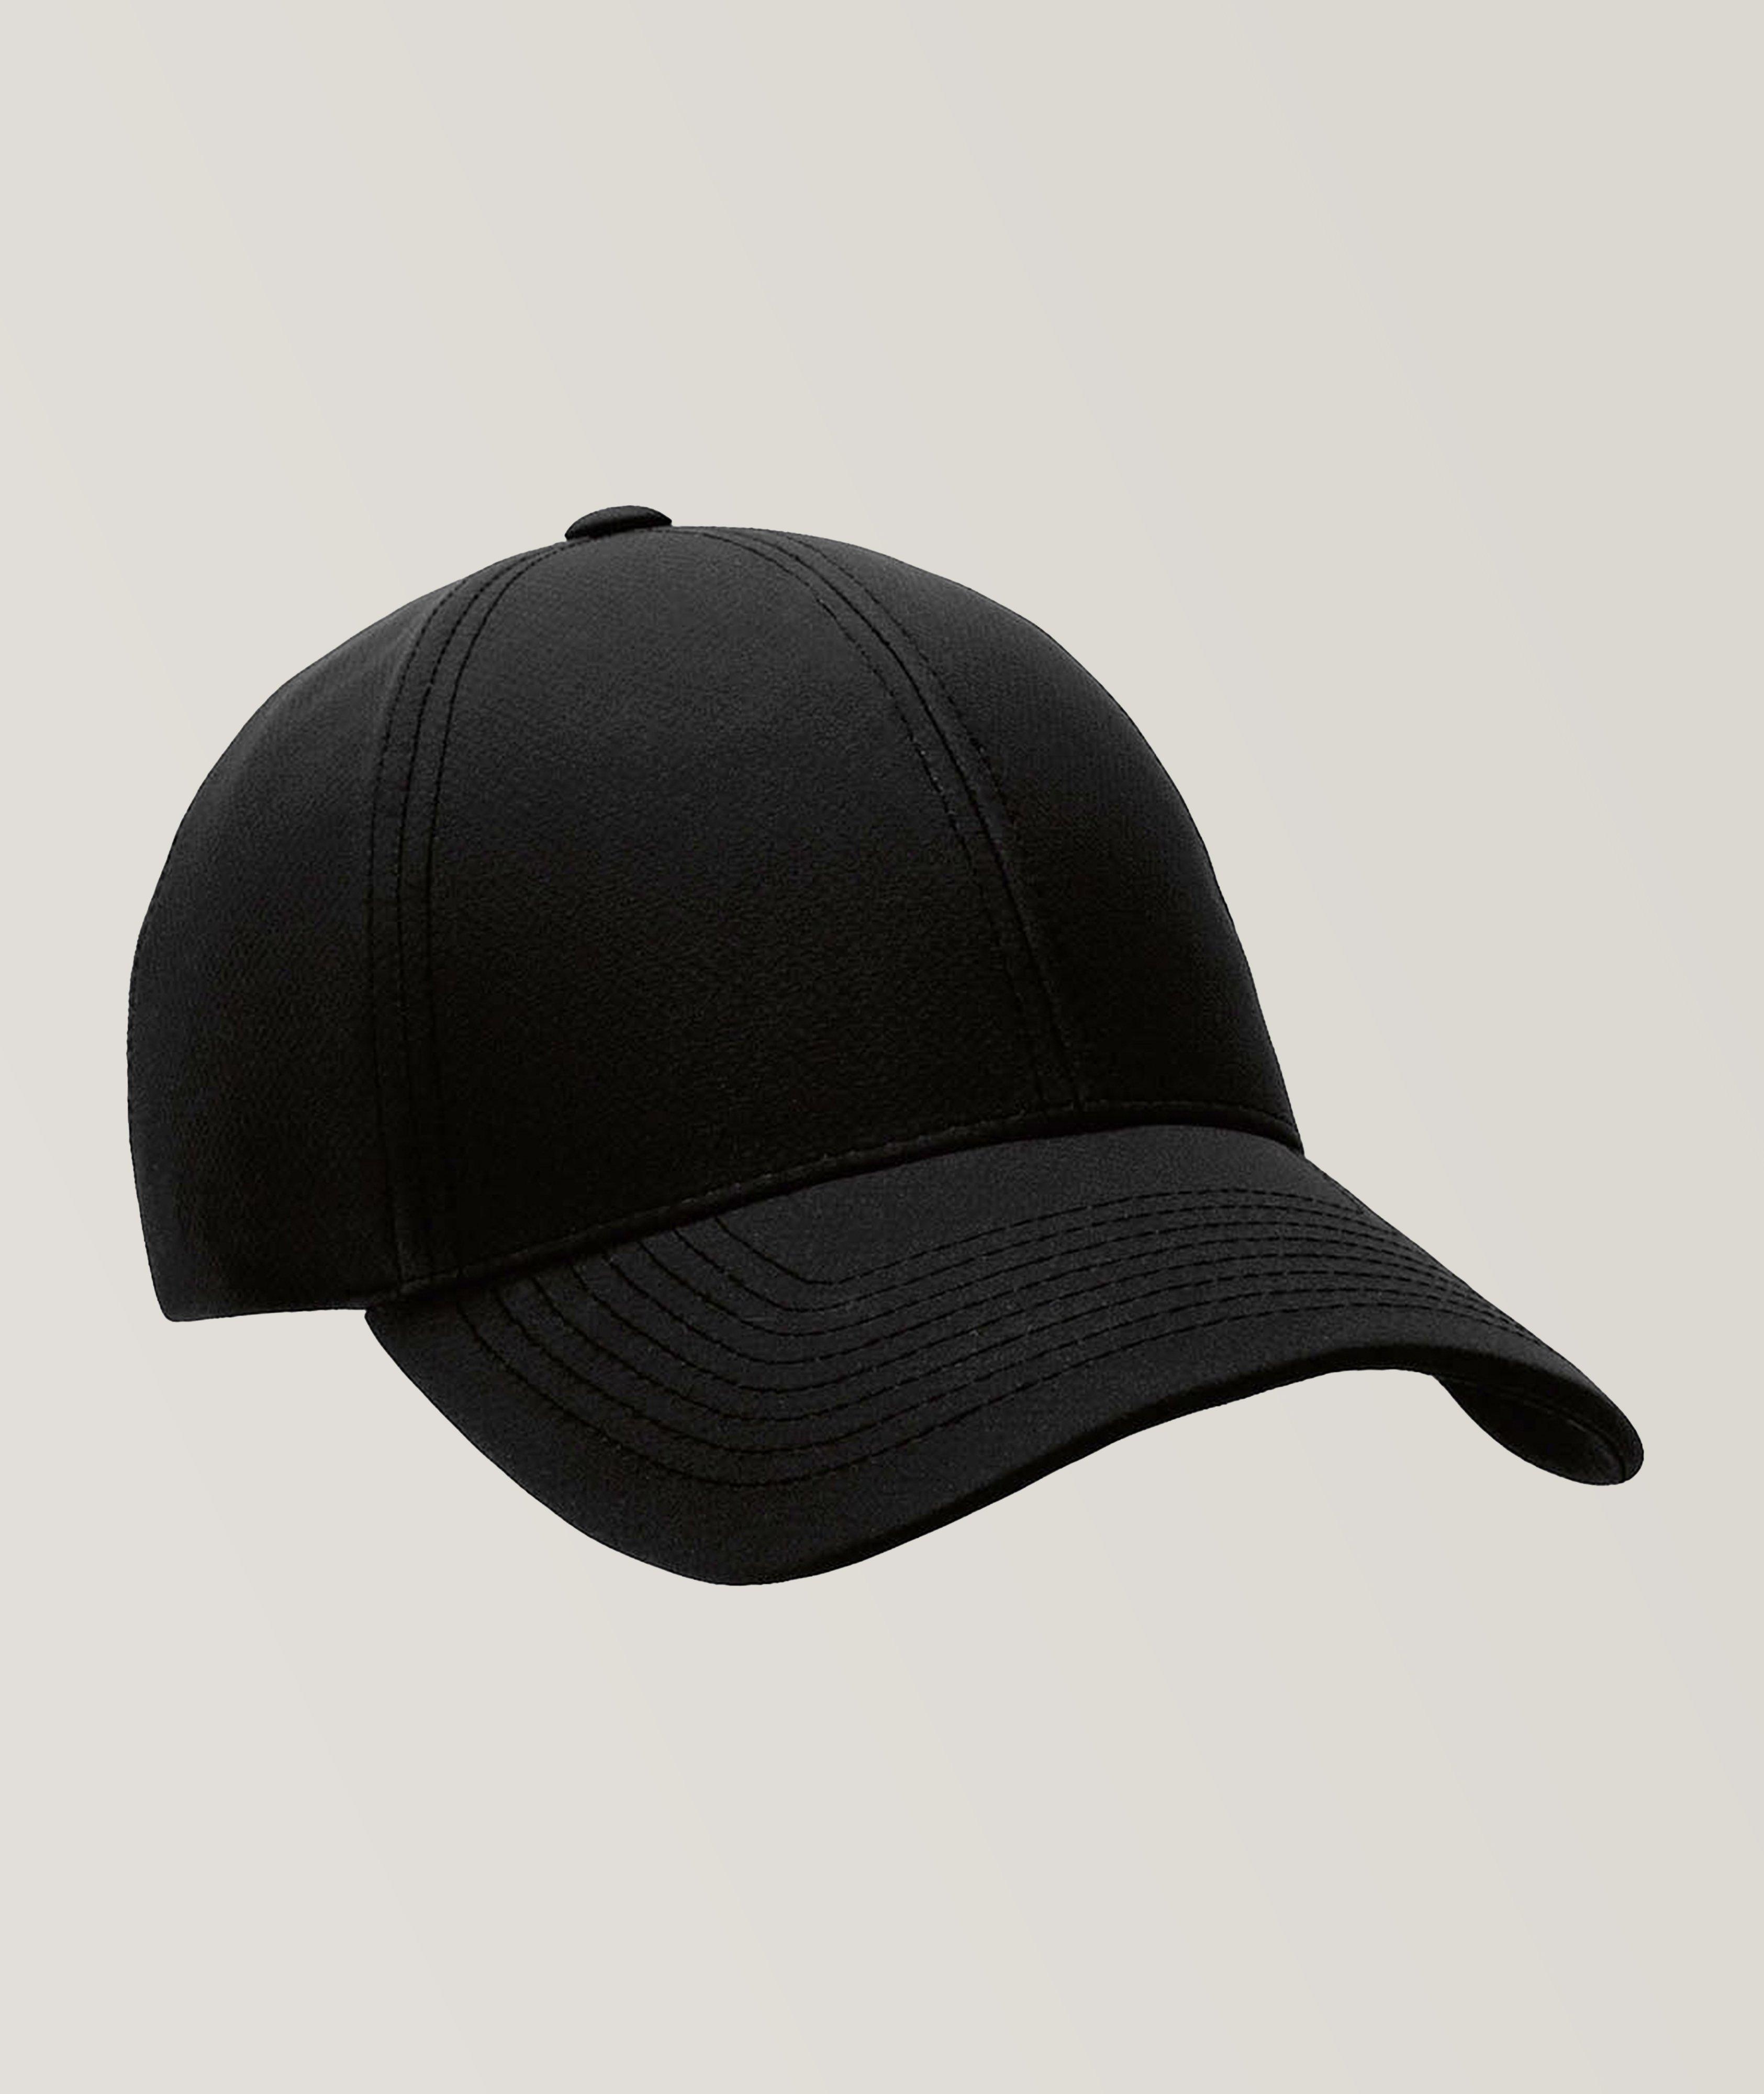 Designer Men's Hats